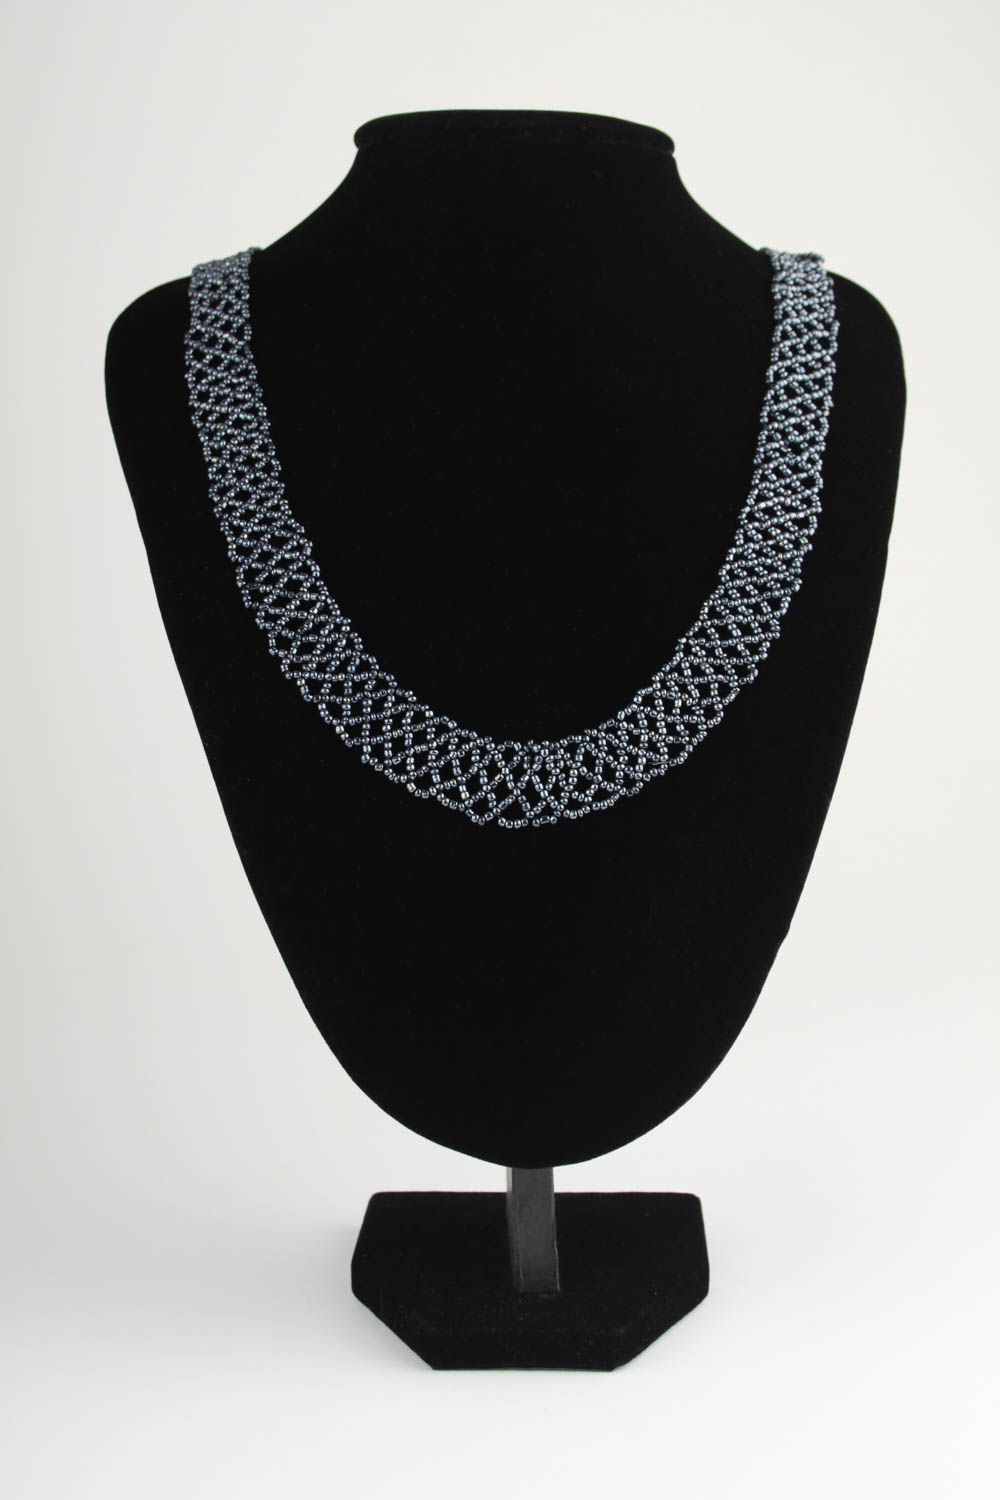 Handmade necklace jewelry with beads designer bijouterie beautiful accessory photo 1